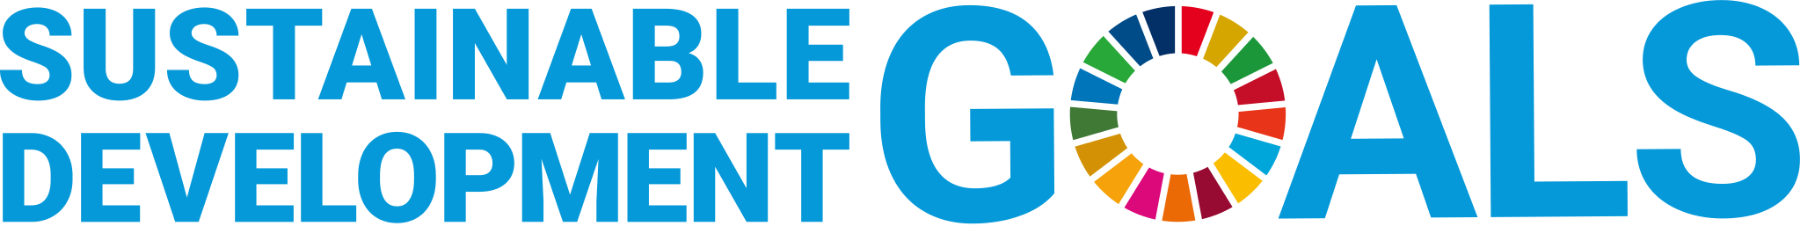 sdg_logo_2021.png